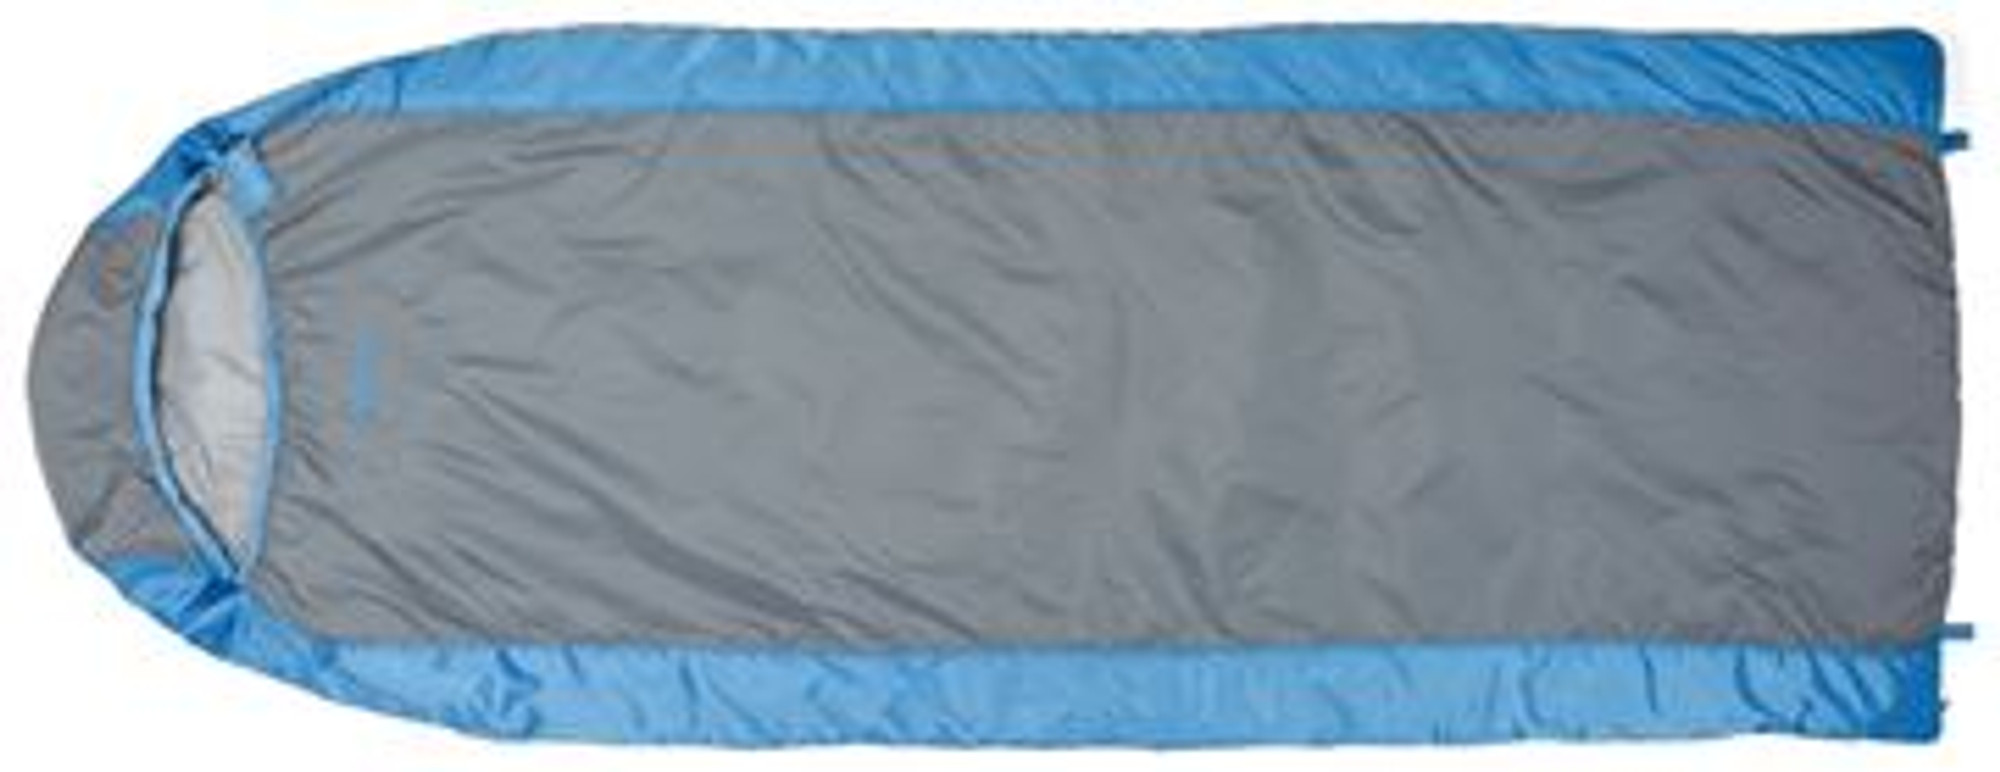 Chinook Sportster SL Hooded Rectangular 23F Sleeping Bag